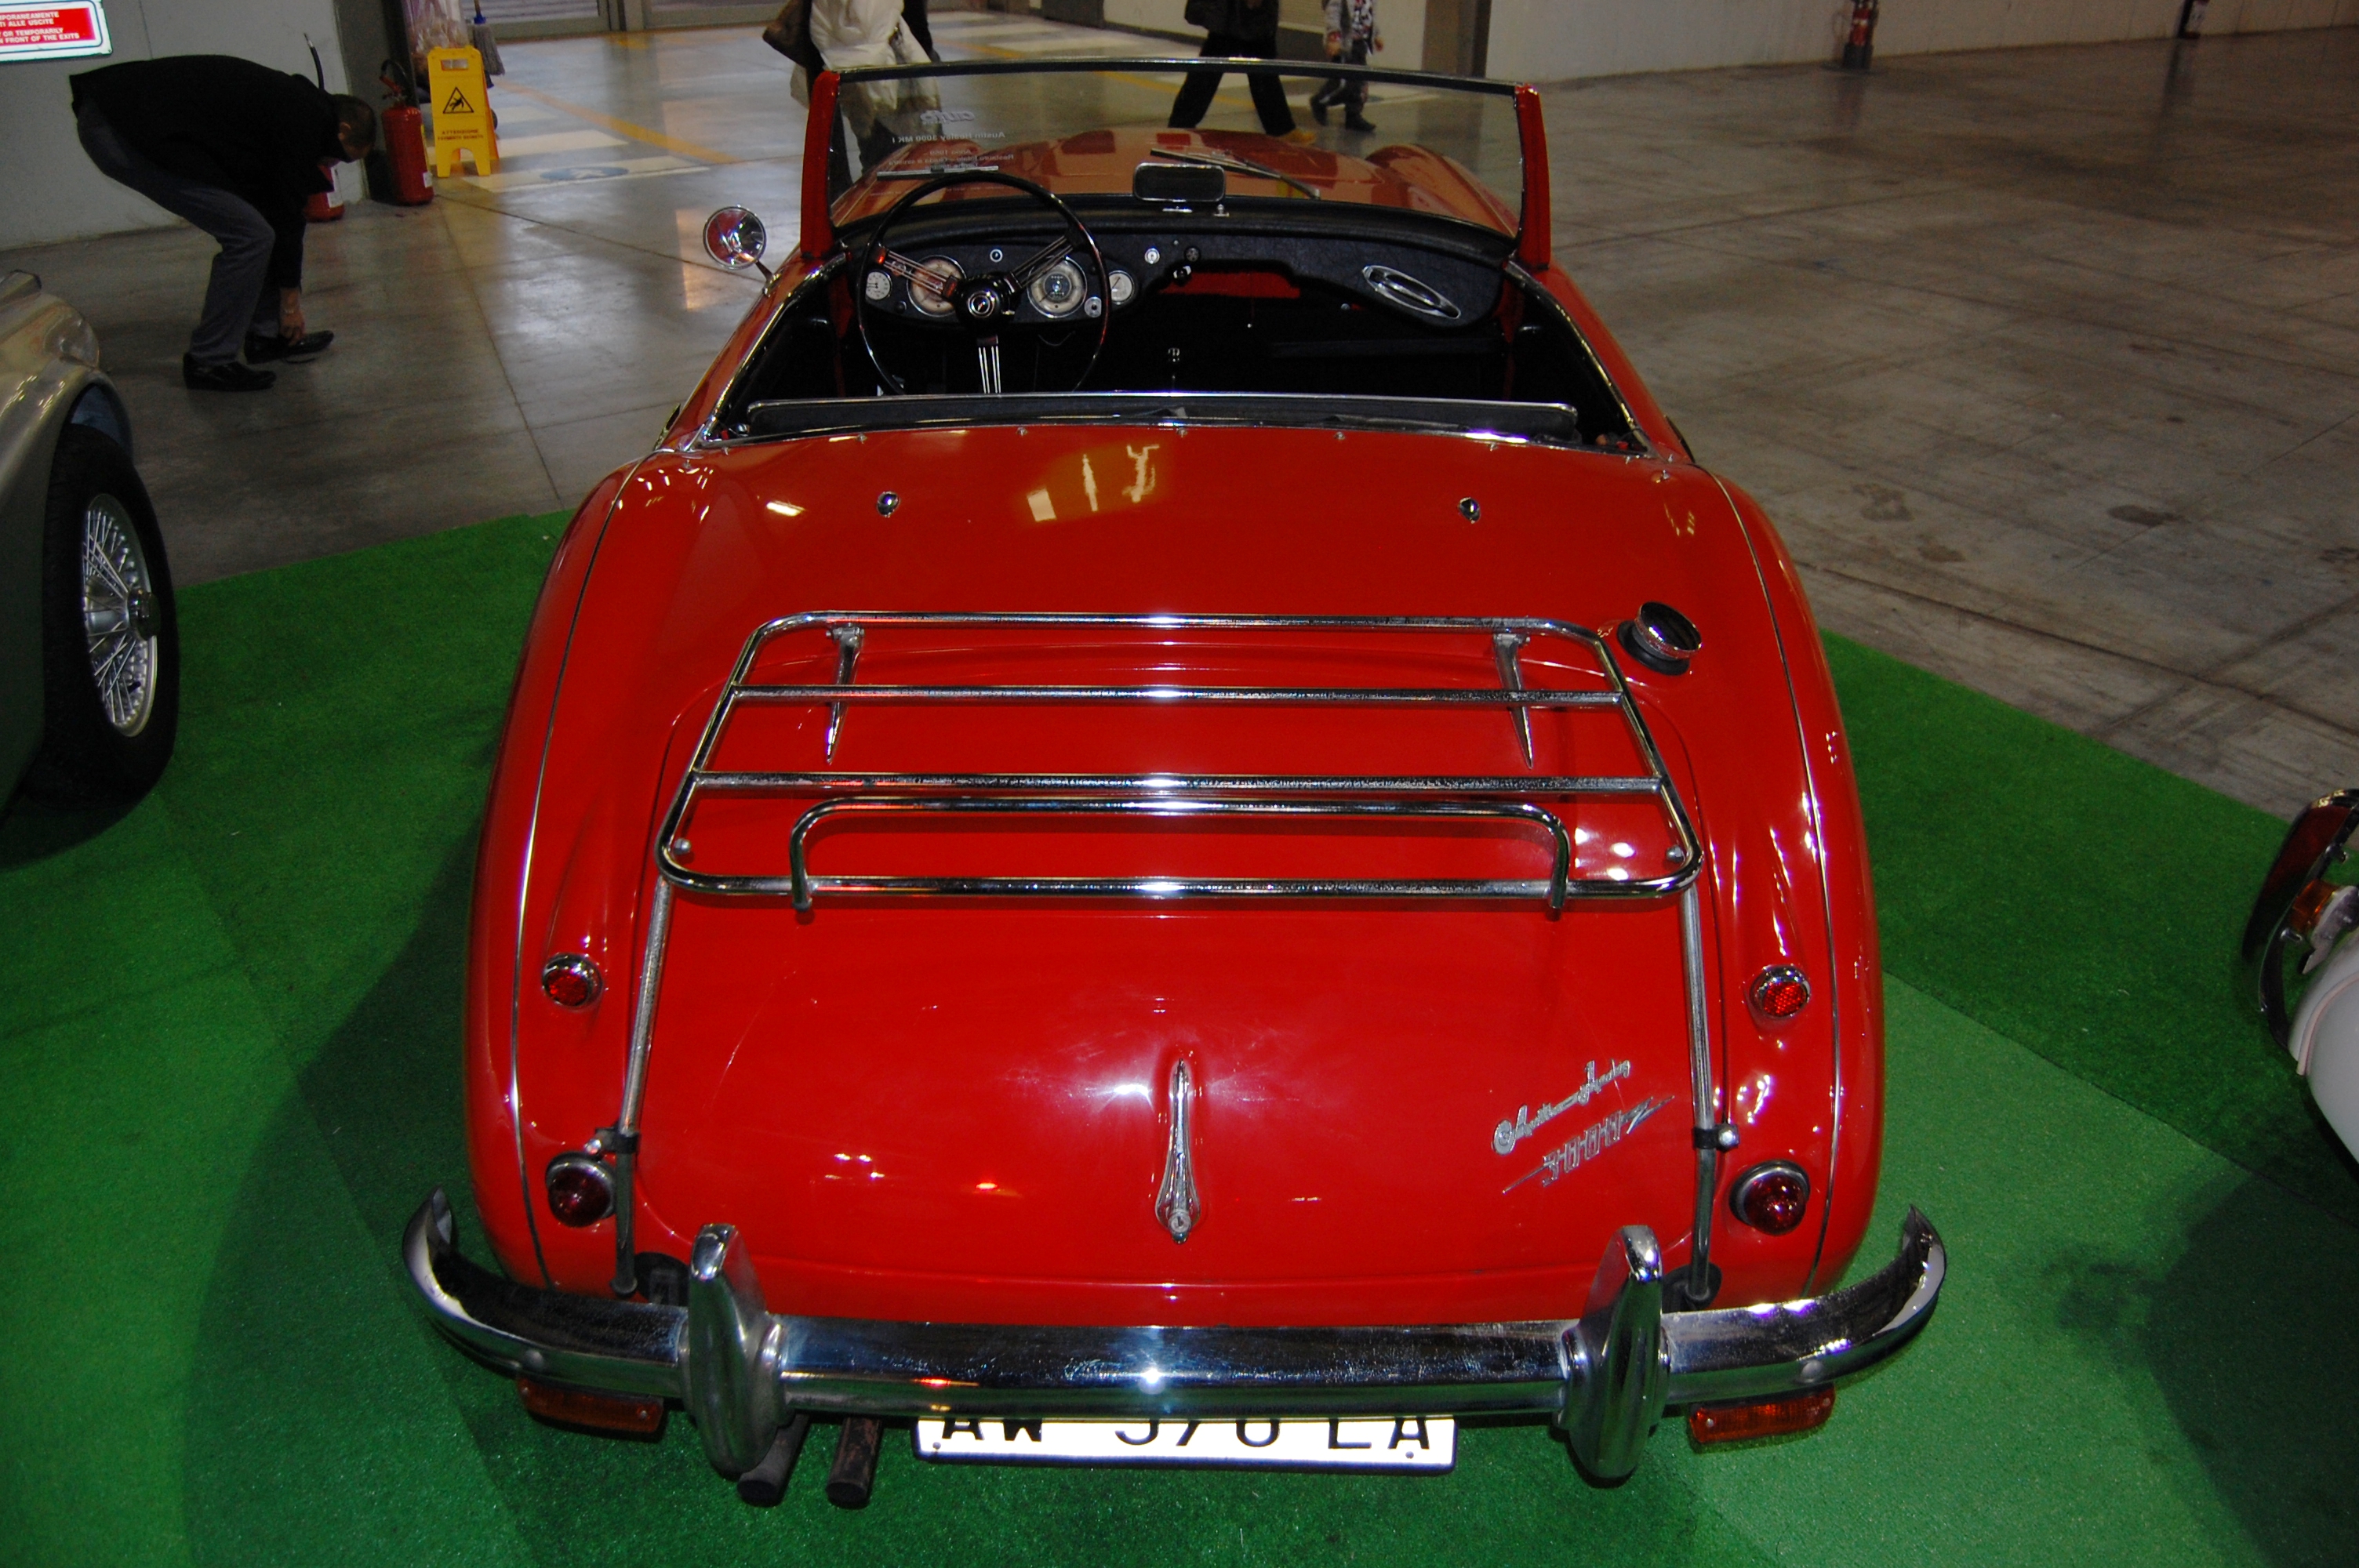 Austin-Healey 3000 Mk I 1959-1961 (1959 BN7), rear view